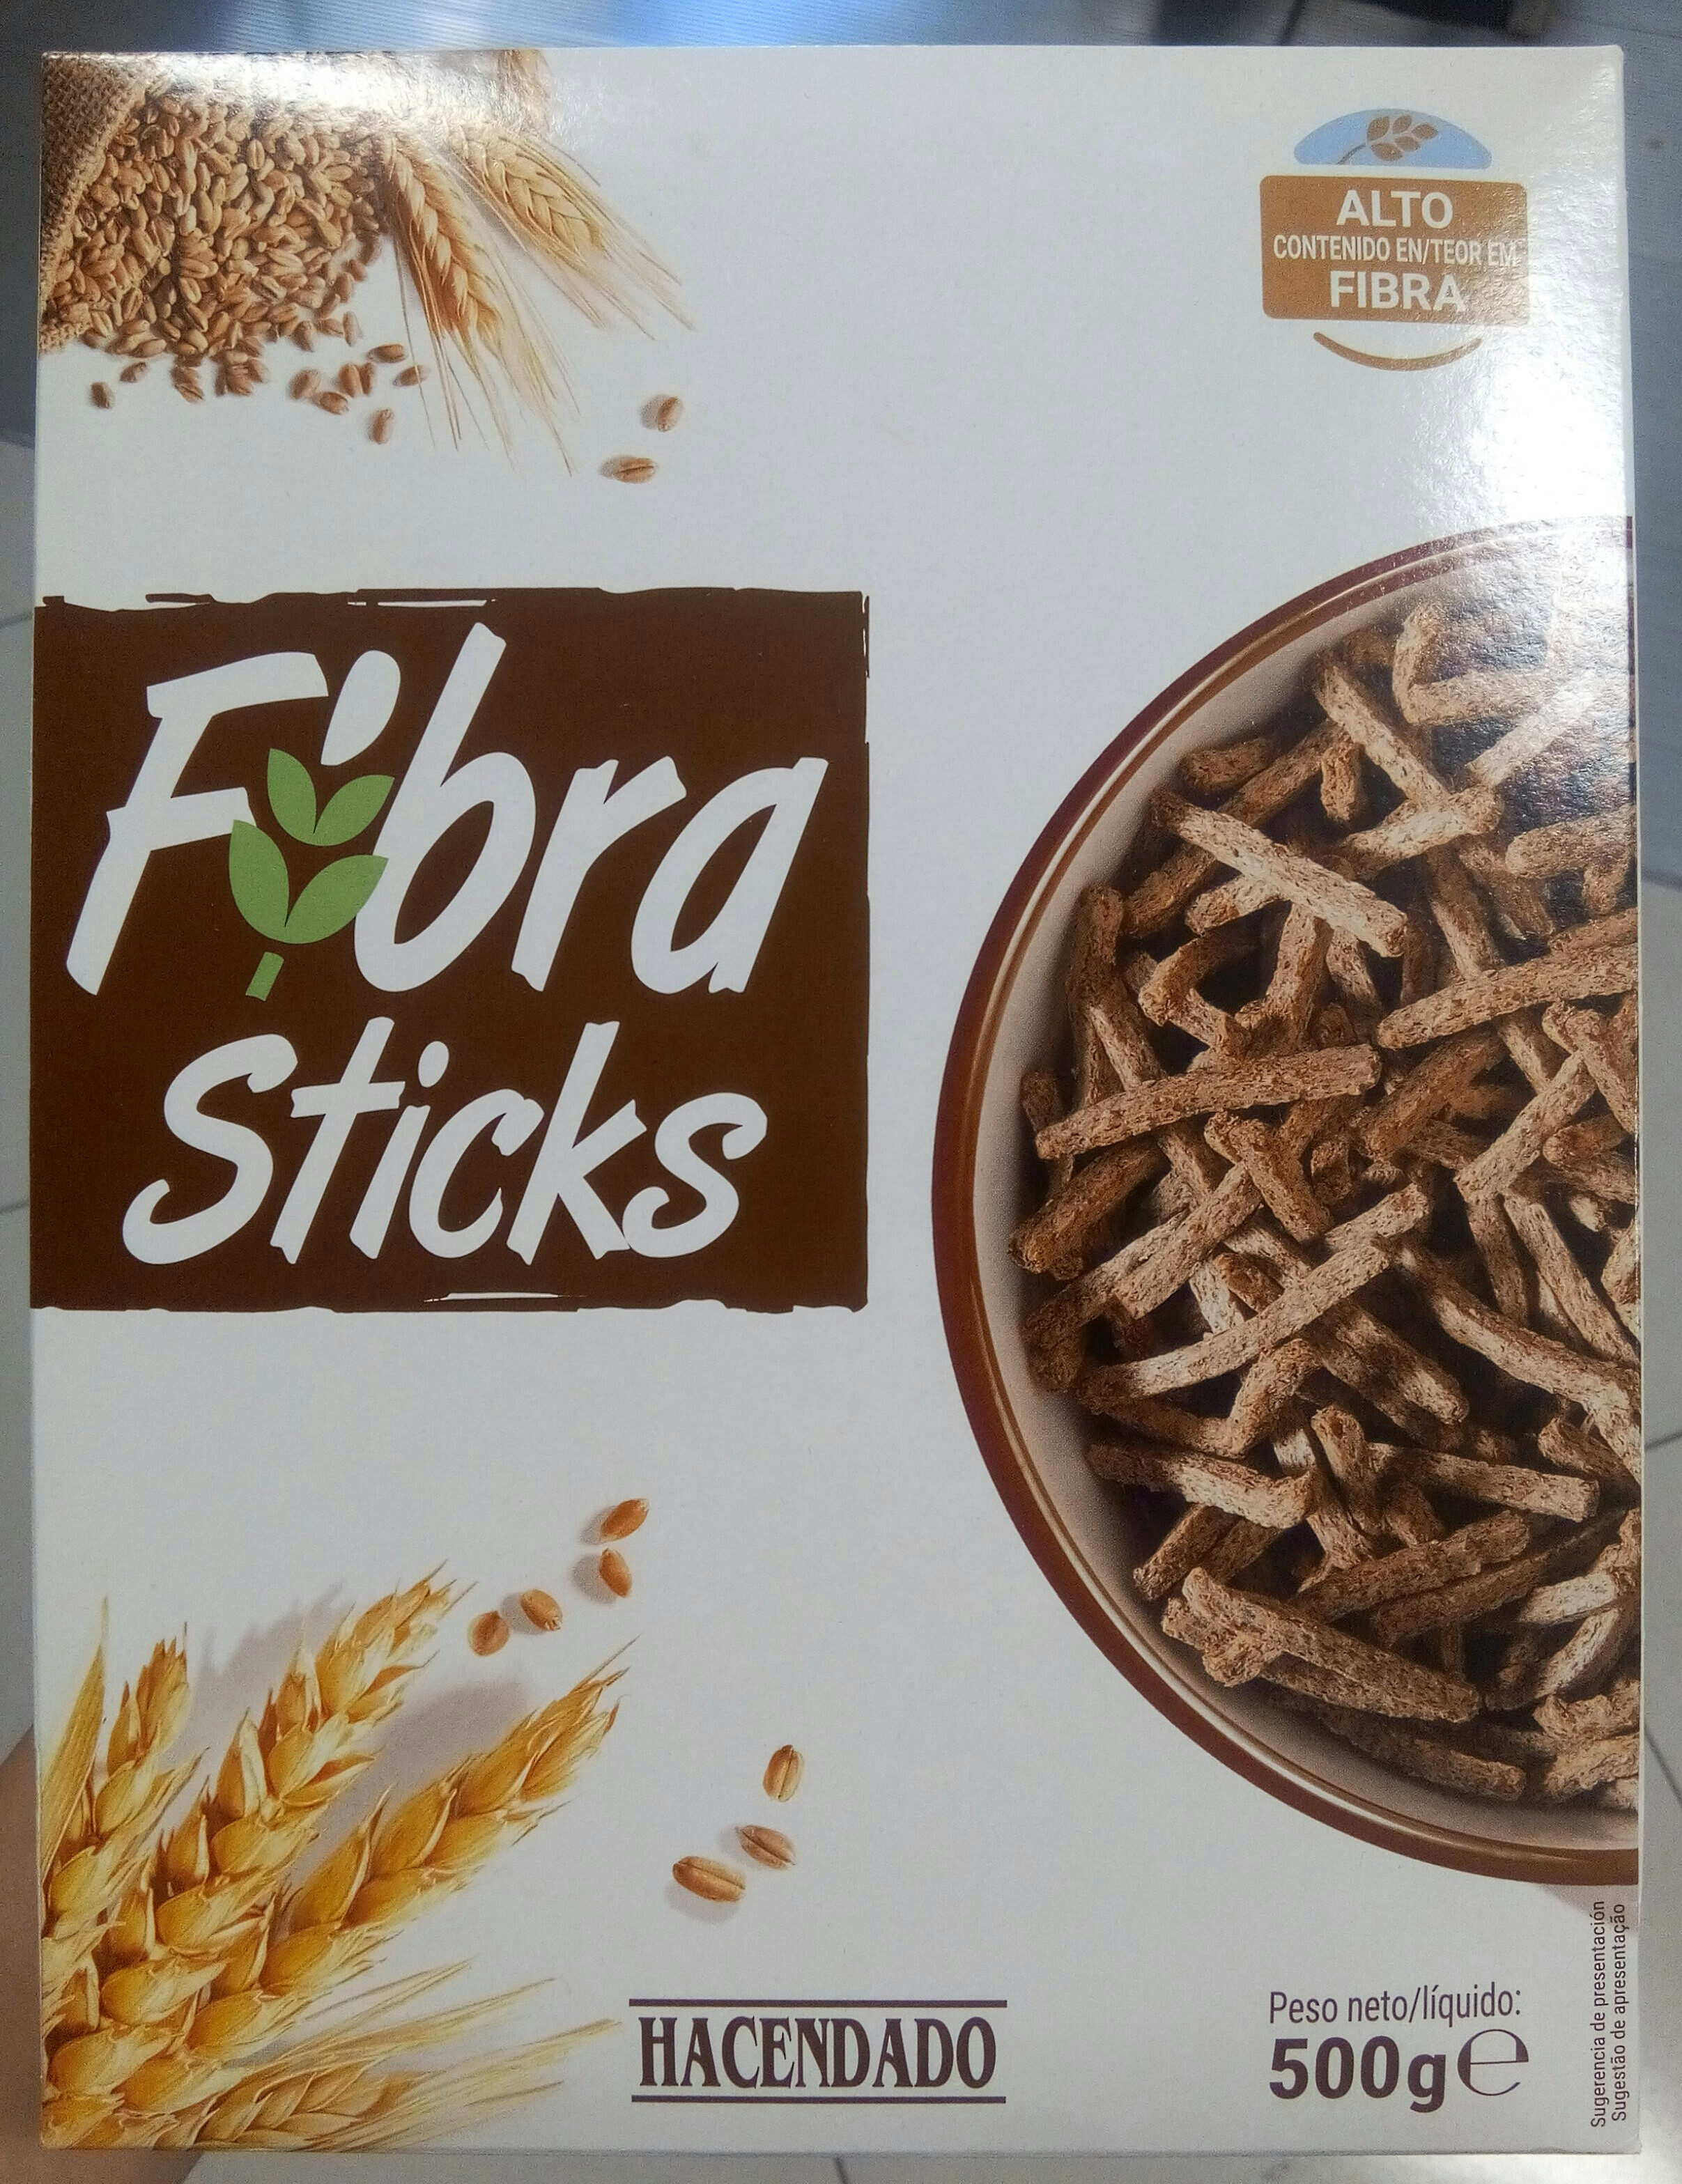 Fibra sticks - Product